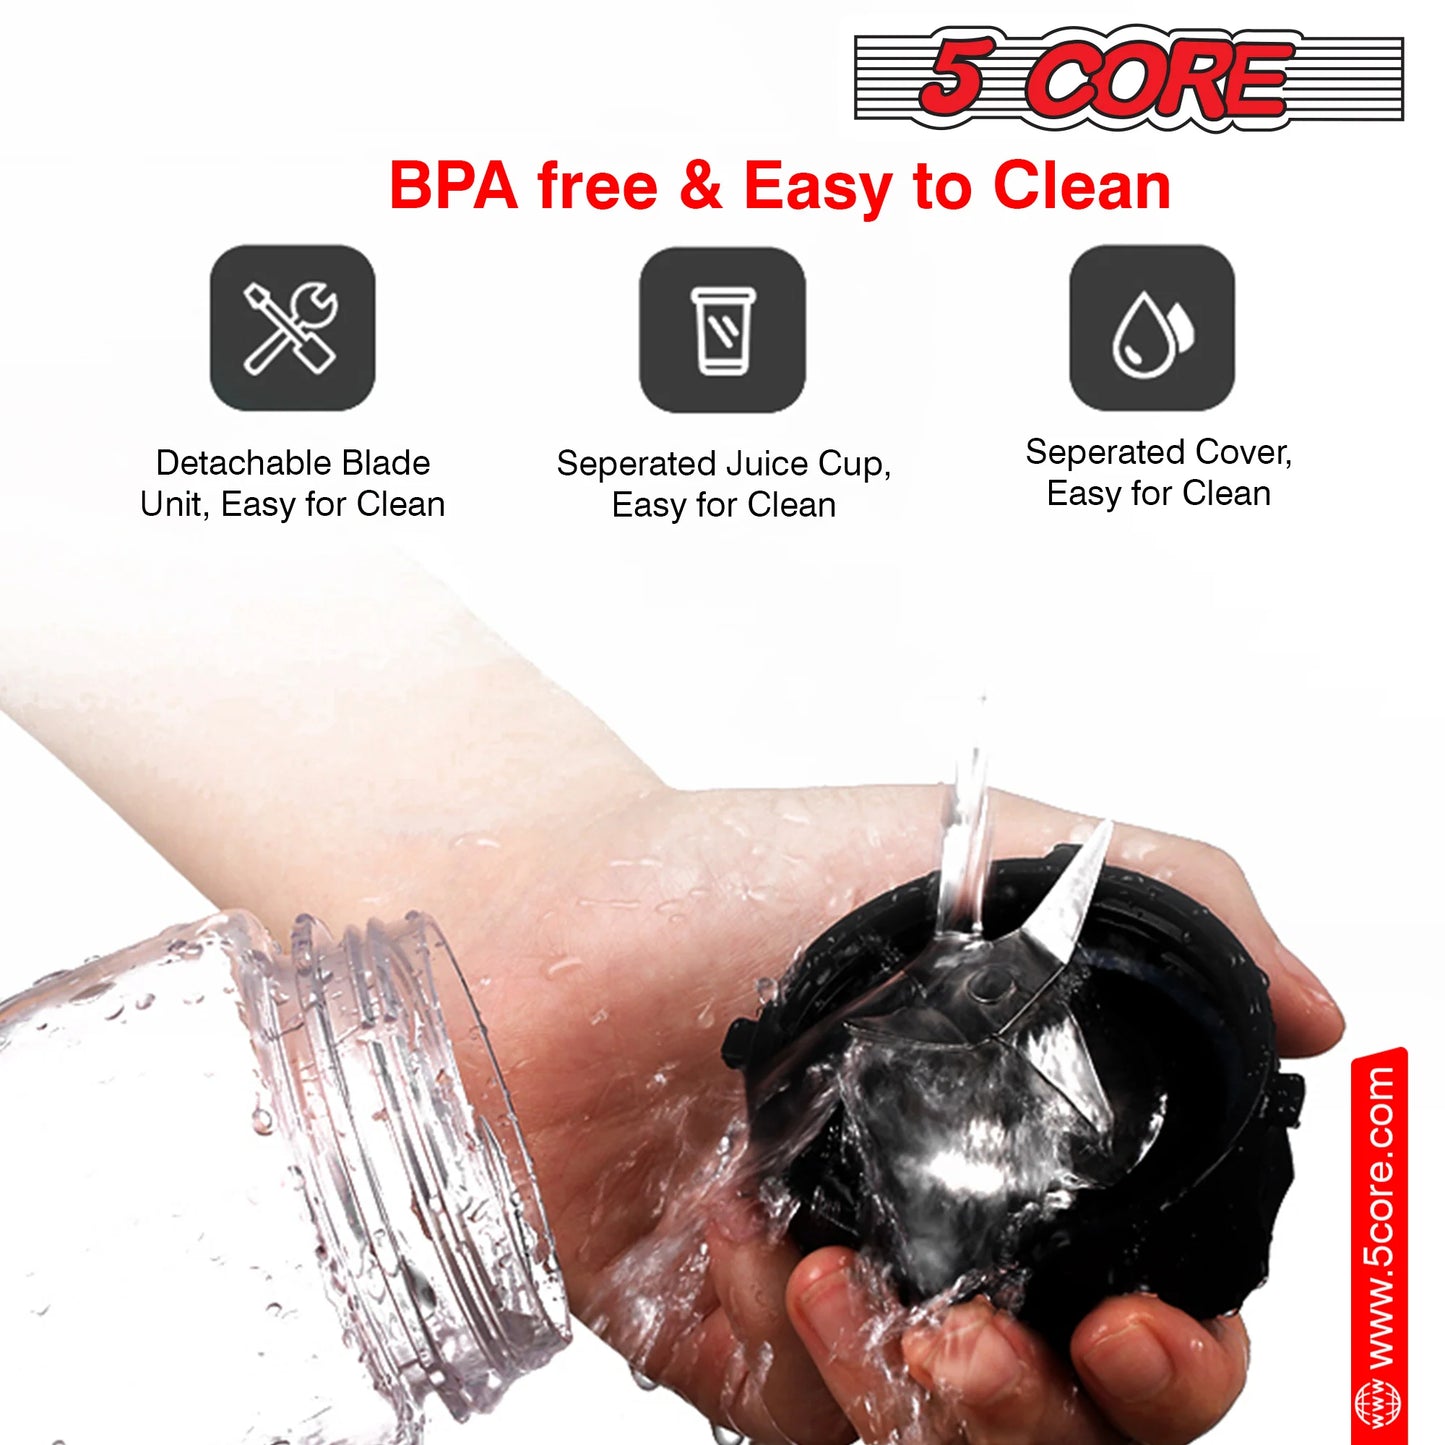 5 Core Personal Blender 20 Oz Capacity BPA Free Food Processor W 600Ml Portable Travel Bottle 300W Electric Motor Powerful Food Processor -5C 521